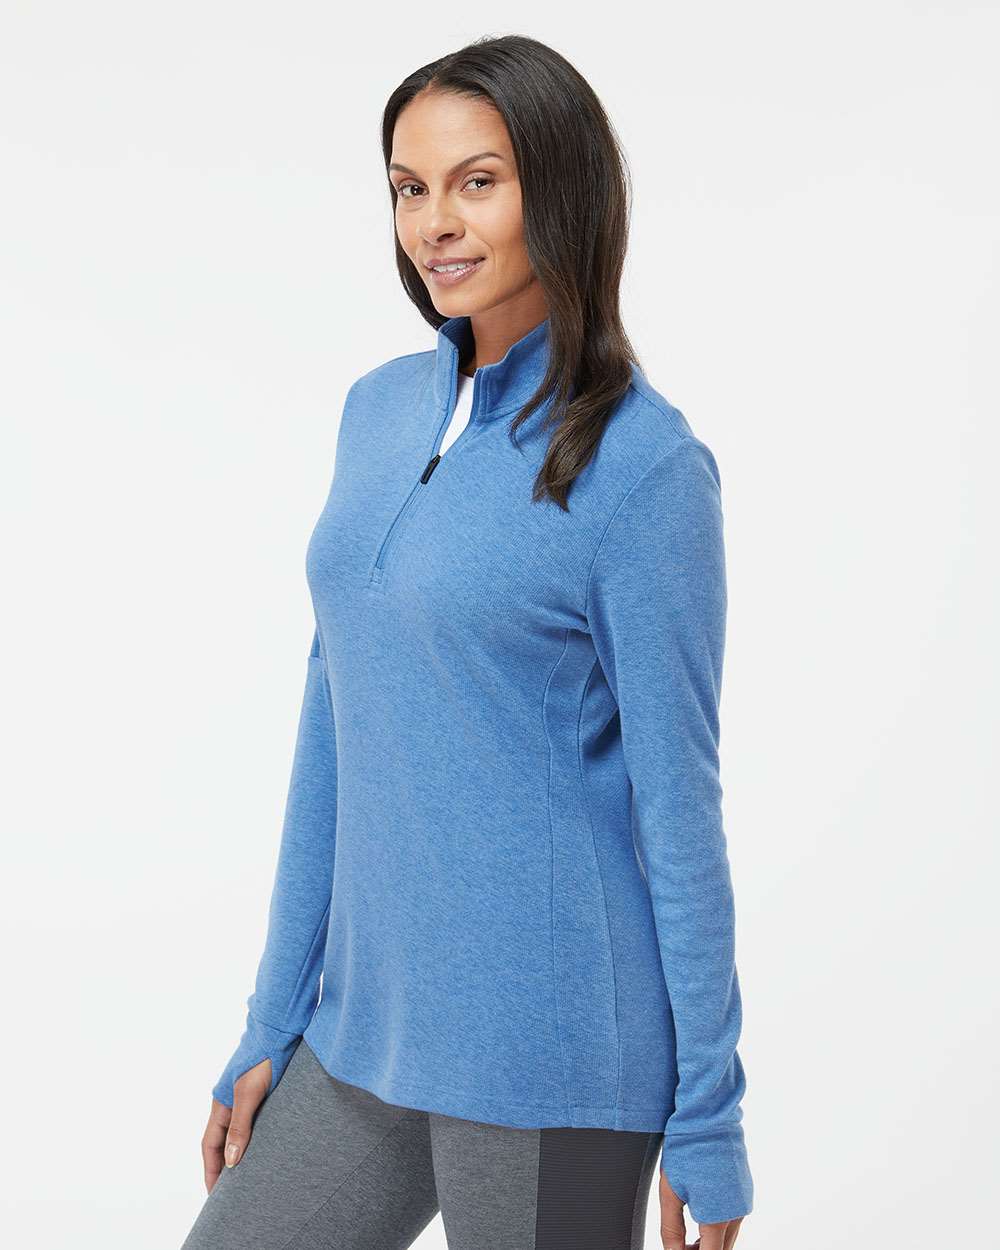 Adidas A555 Women's 3-Stripes Quarter-Zip Sweater #colormdl_Focus Blue Melange